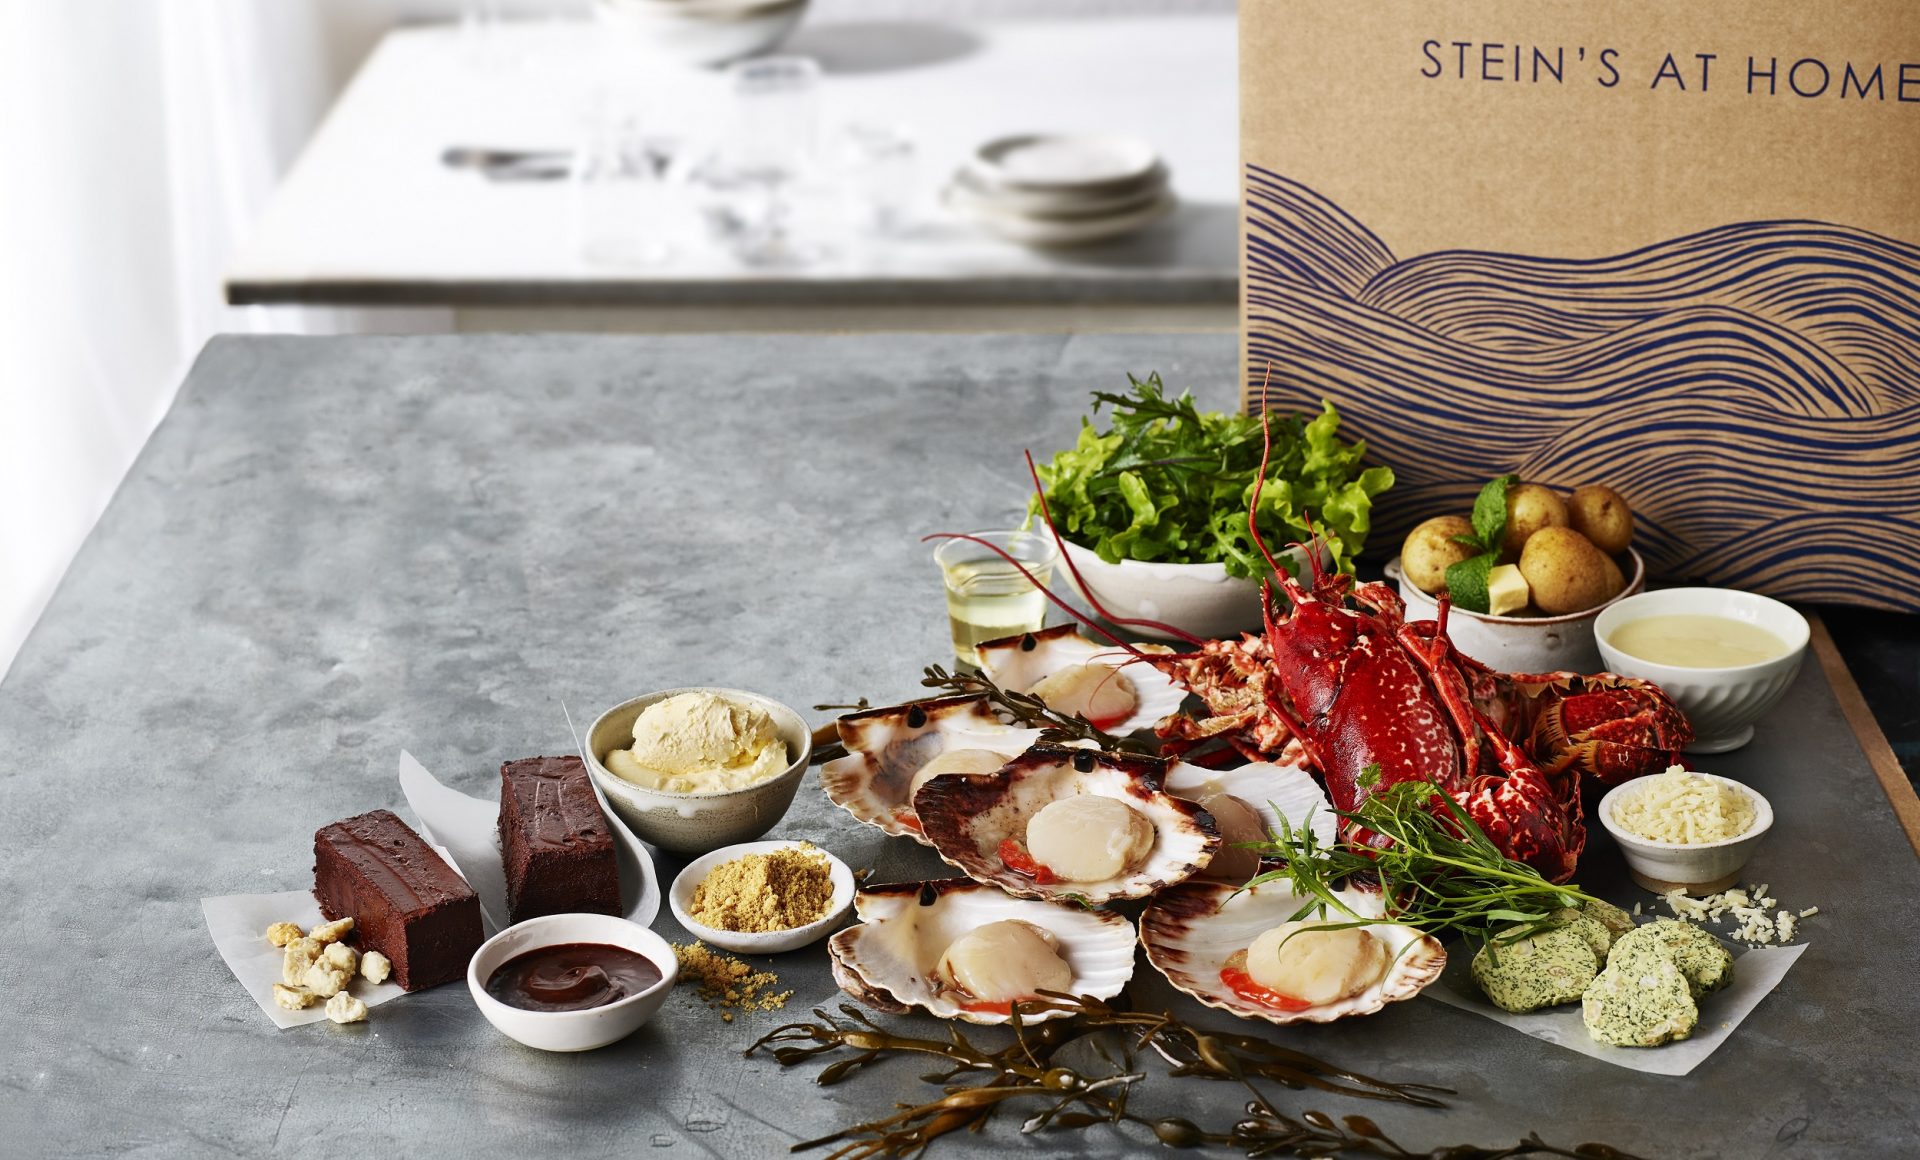 Steins-at-Home-Lobster-Box-Ingredients-JAMES-MURPHY